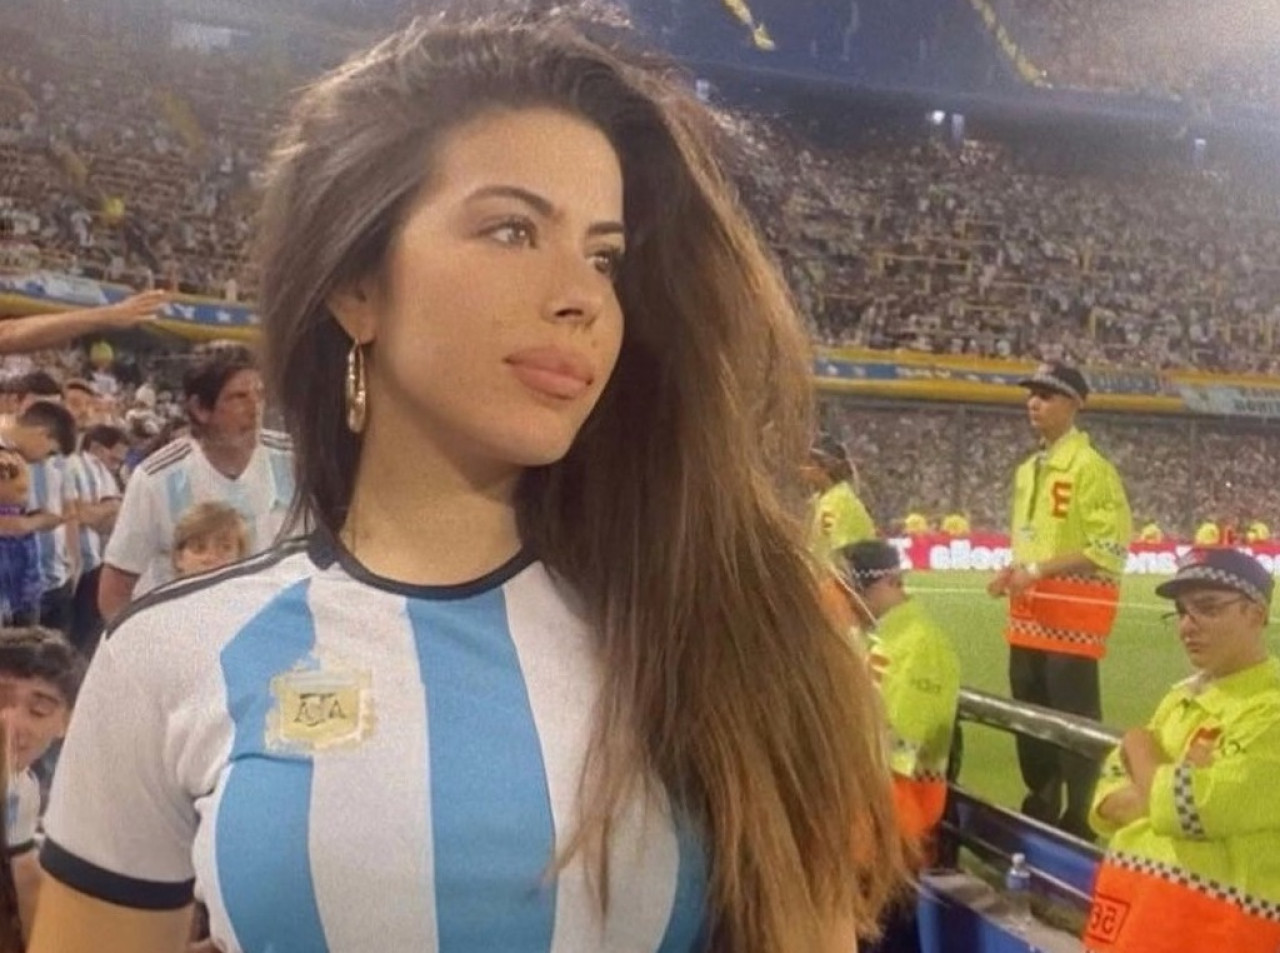 Sara Duque alentando a Argentina en la Bombonera. Foto: Instagram @saralduque.